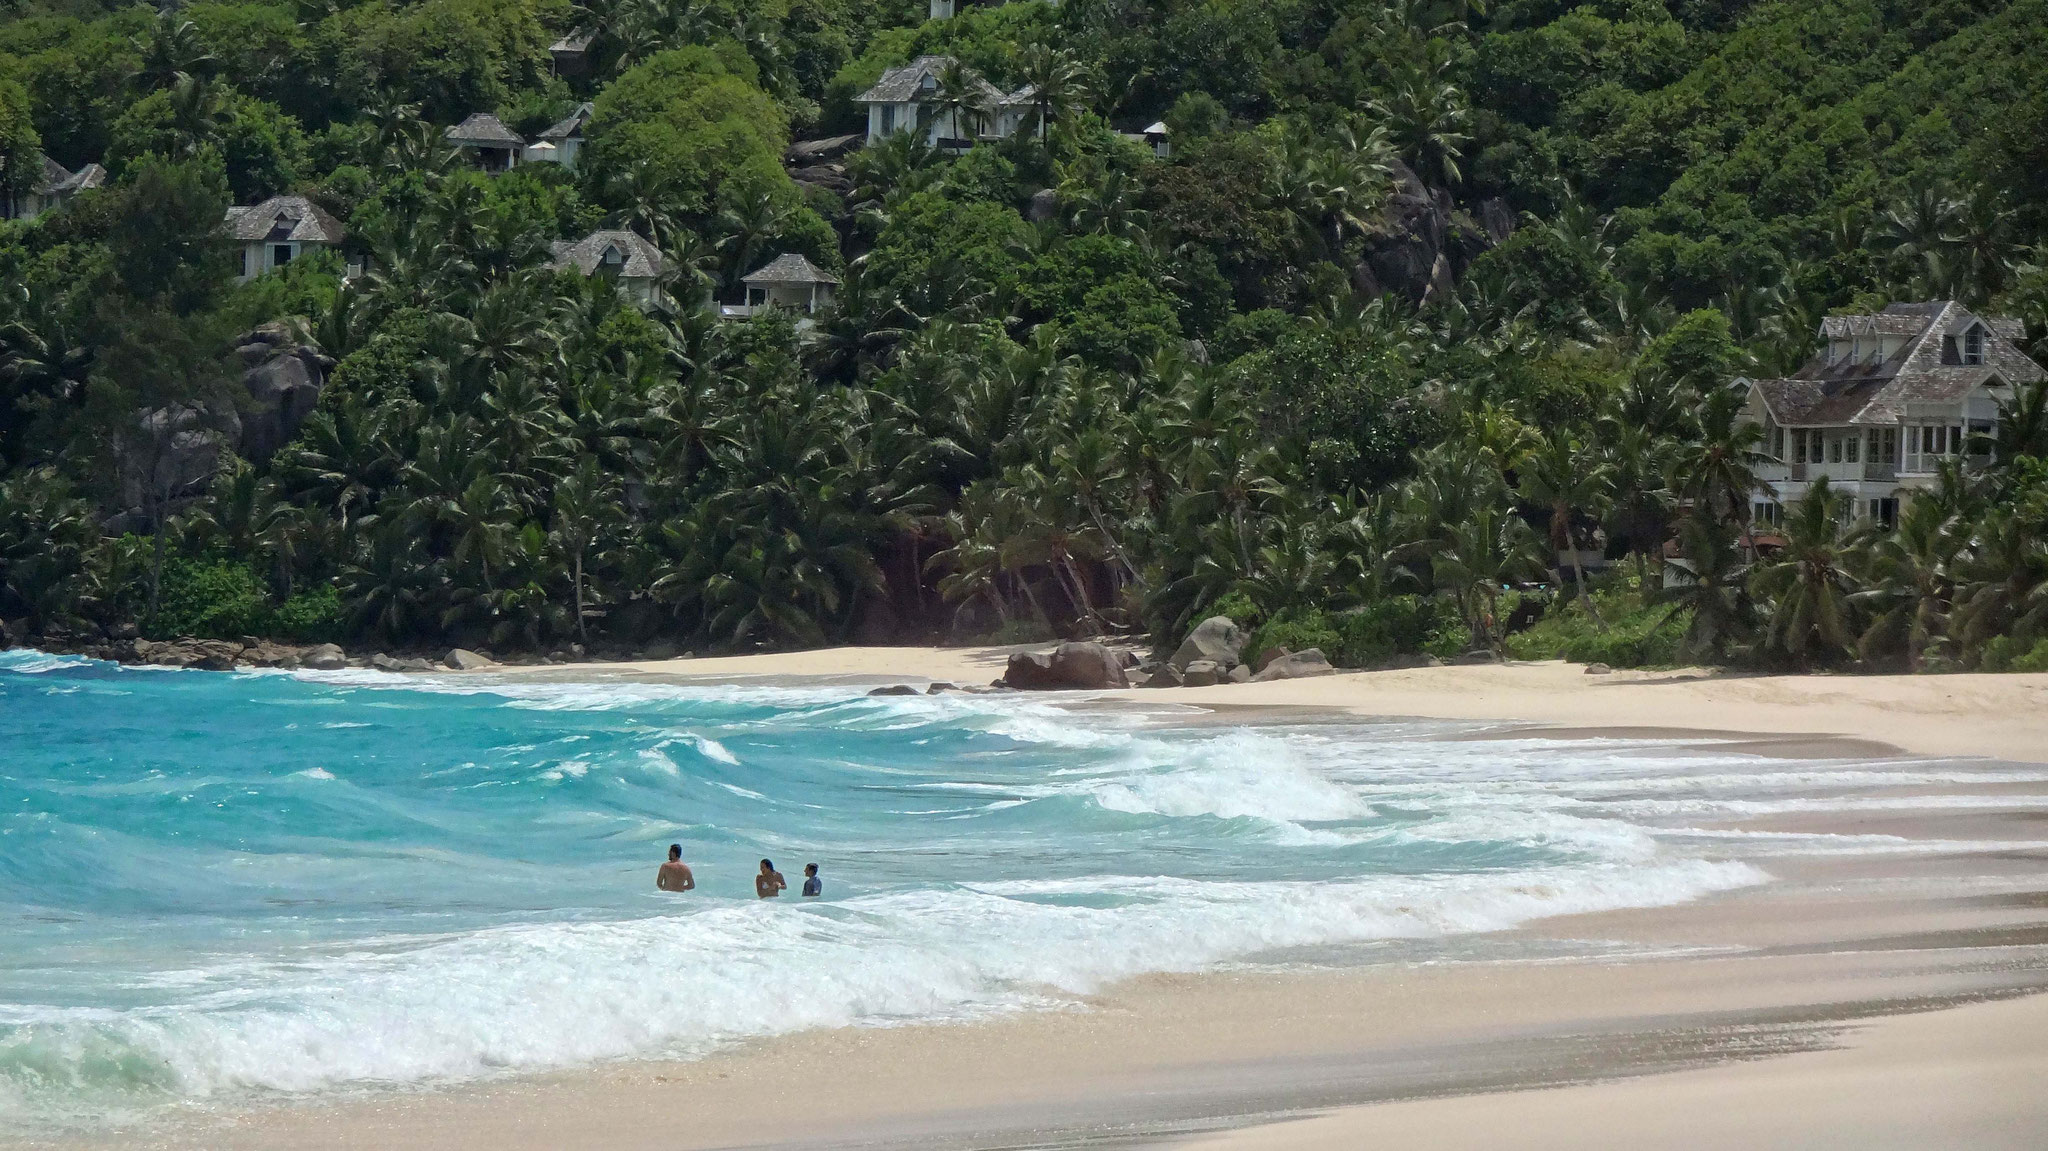 Anse Intendance - Mahé - Seychelles